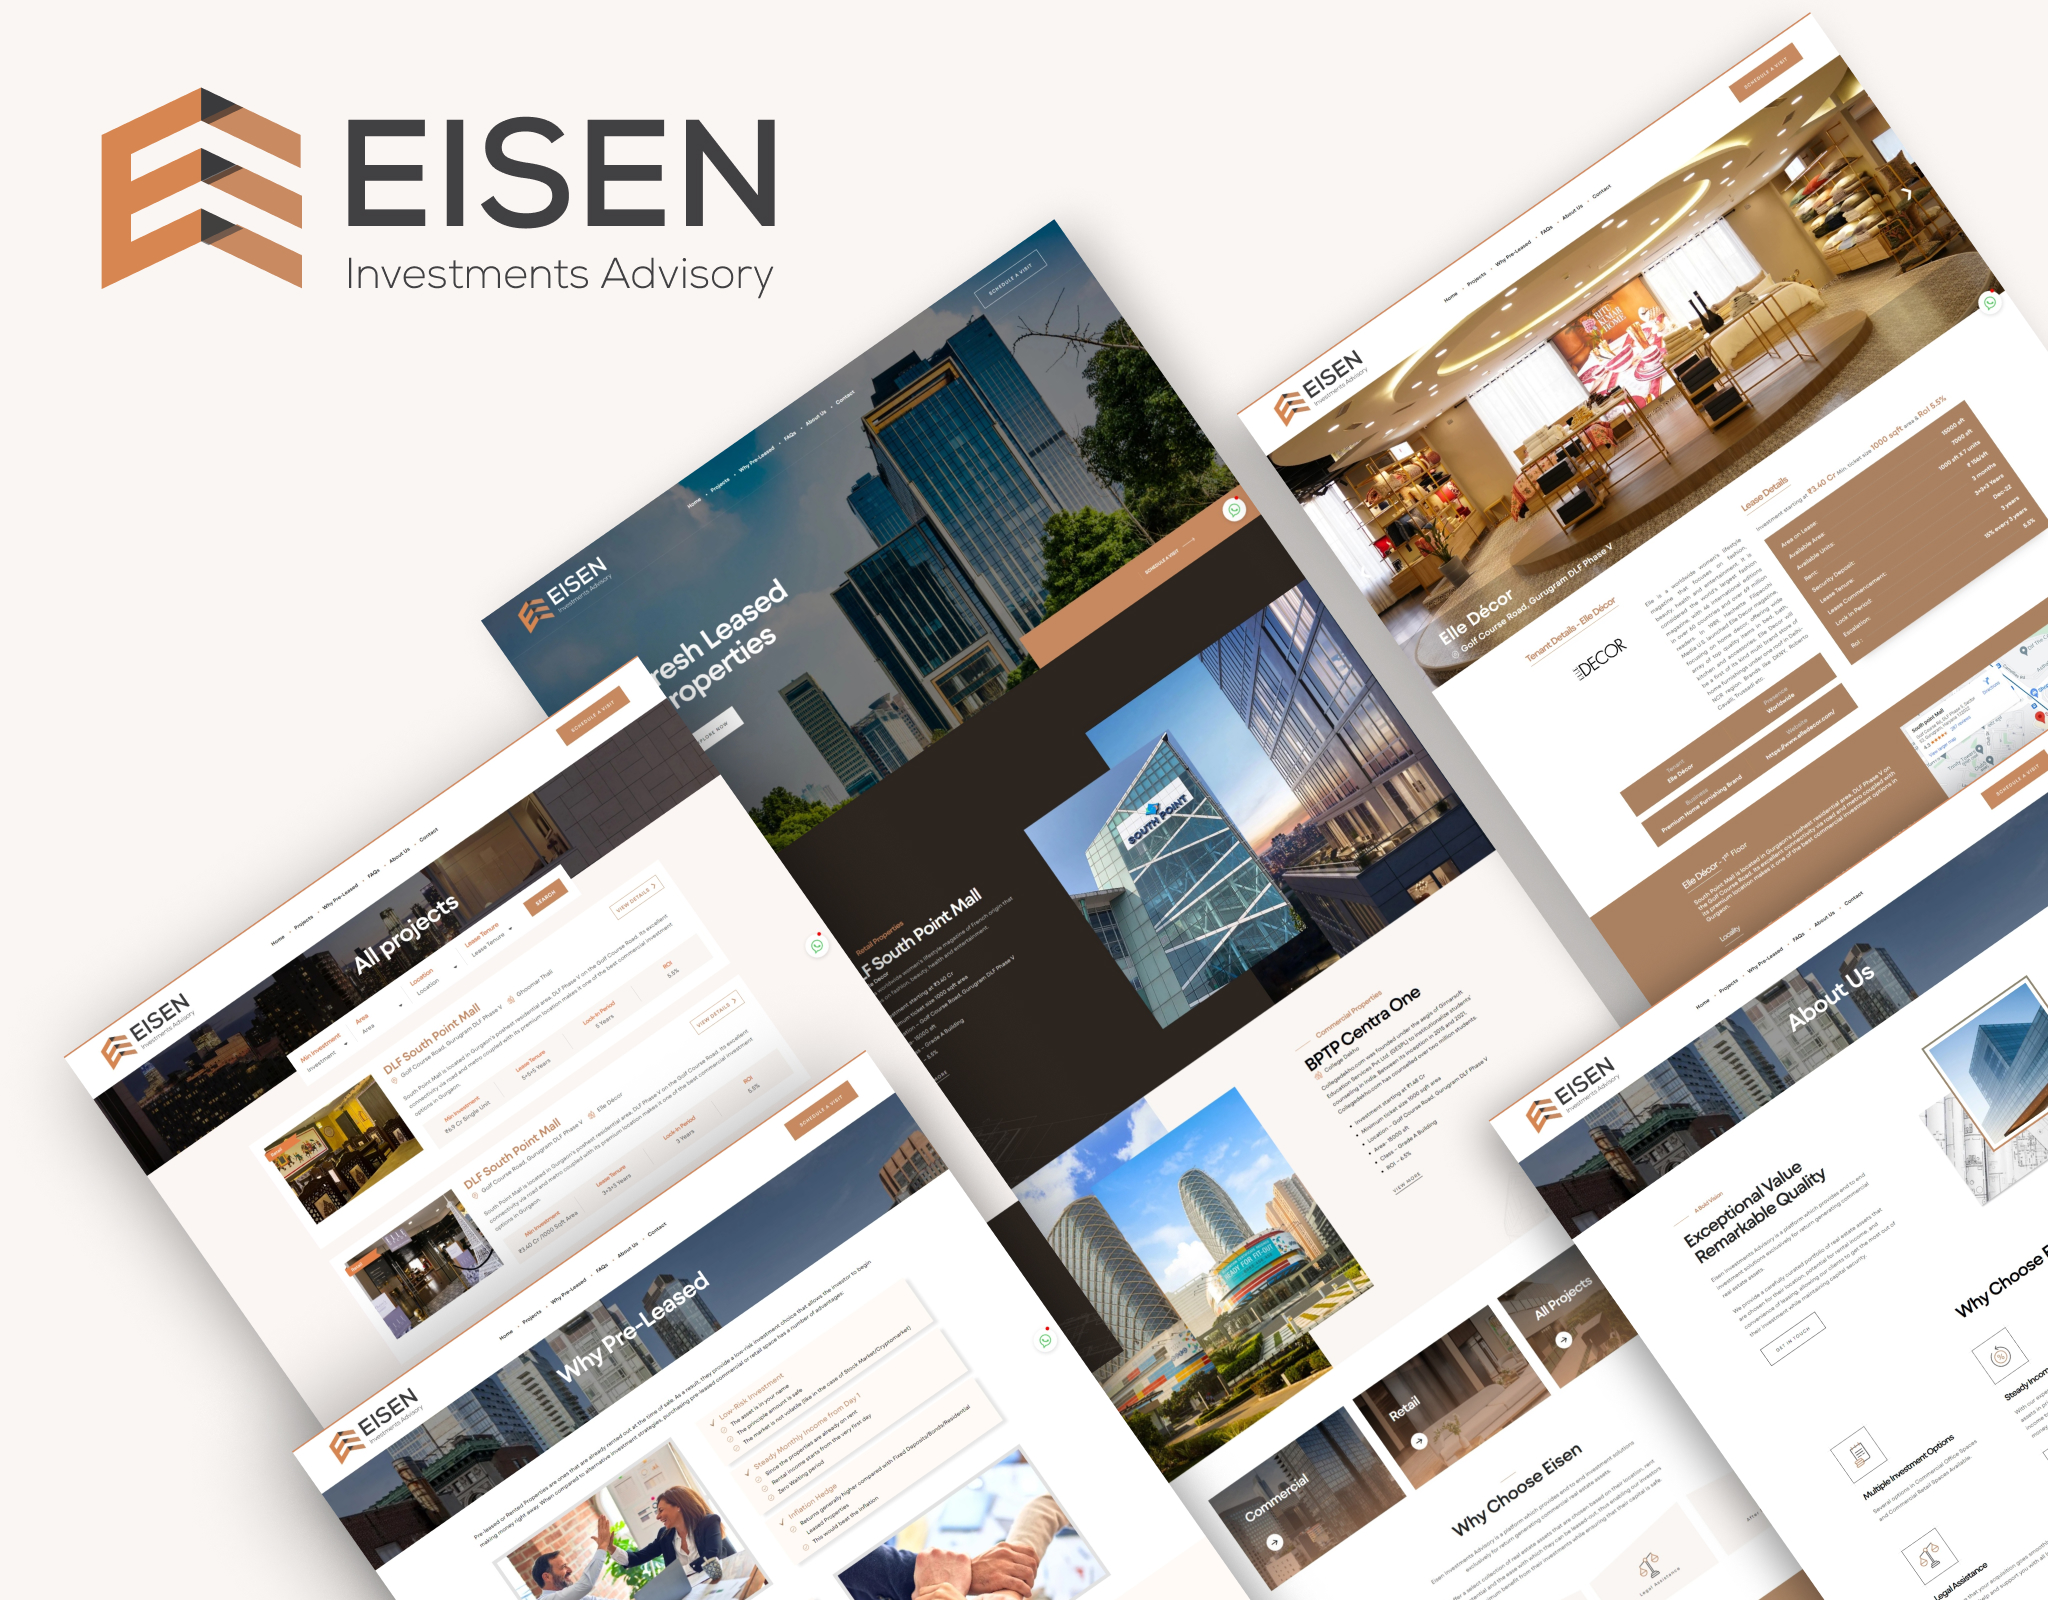 Eisen-web-screen